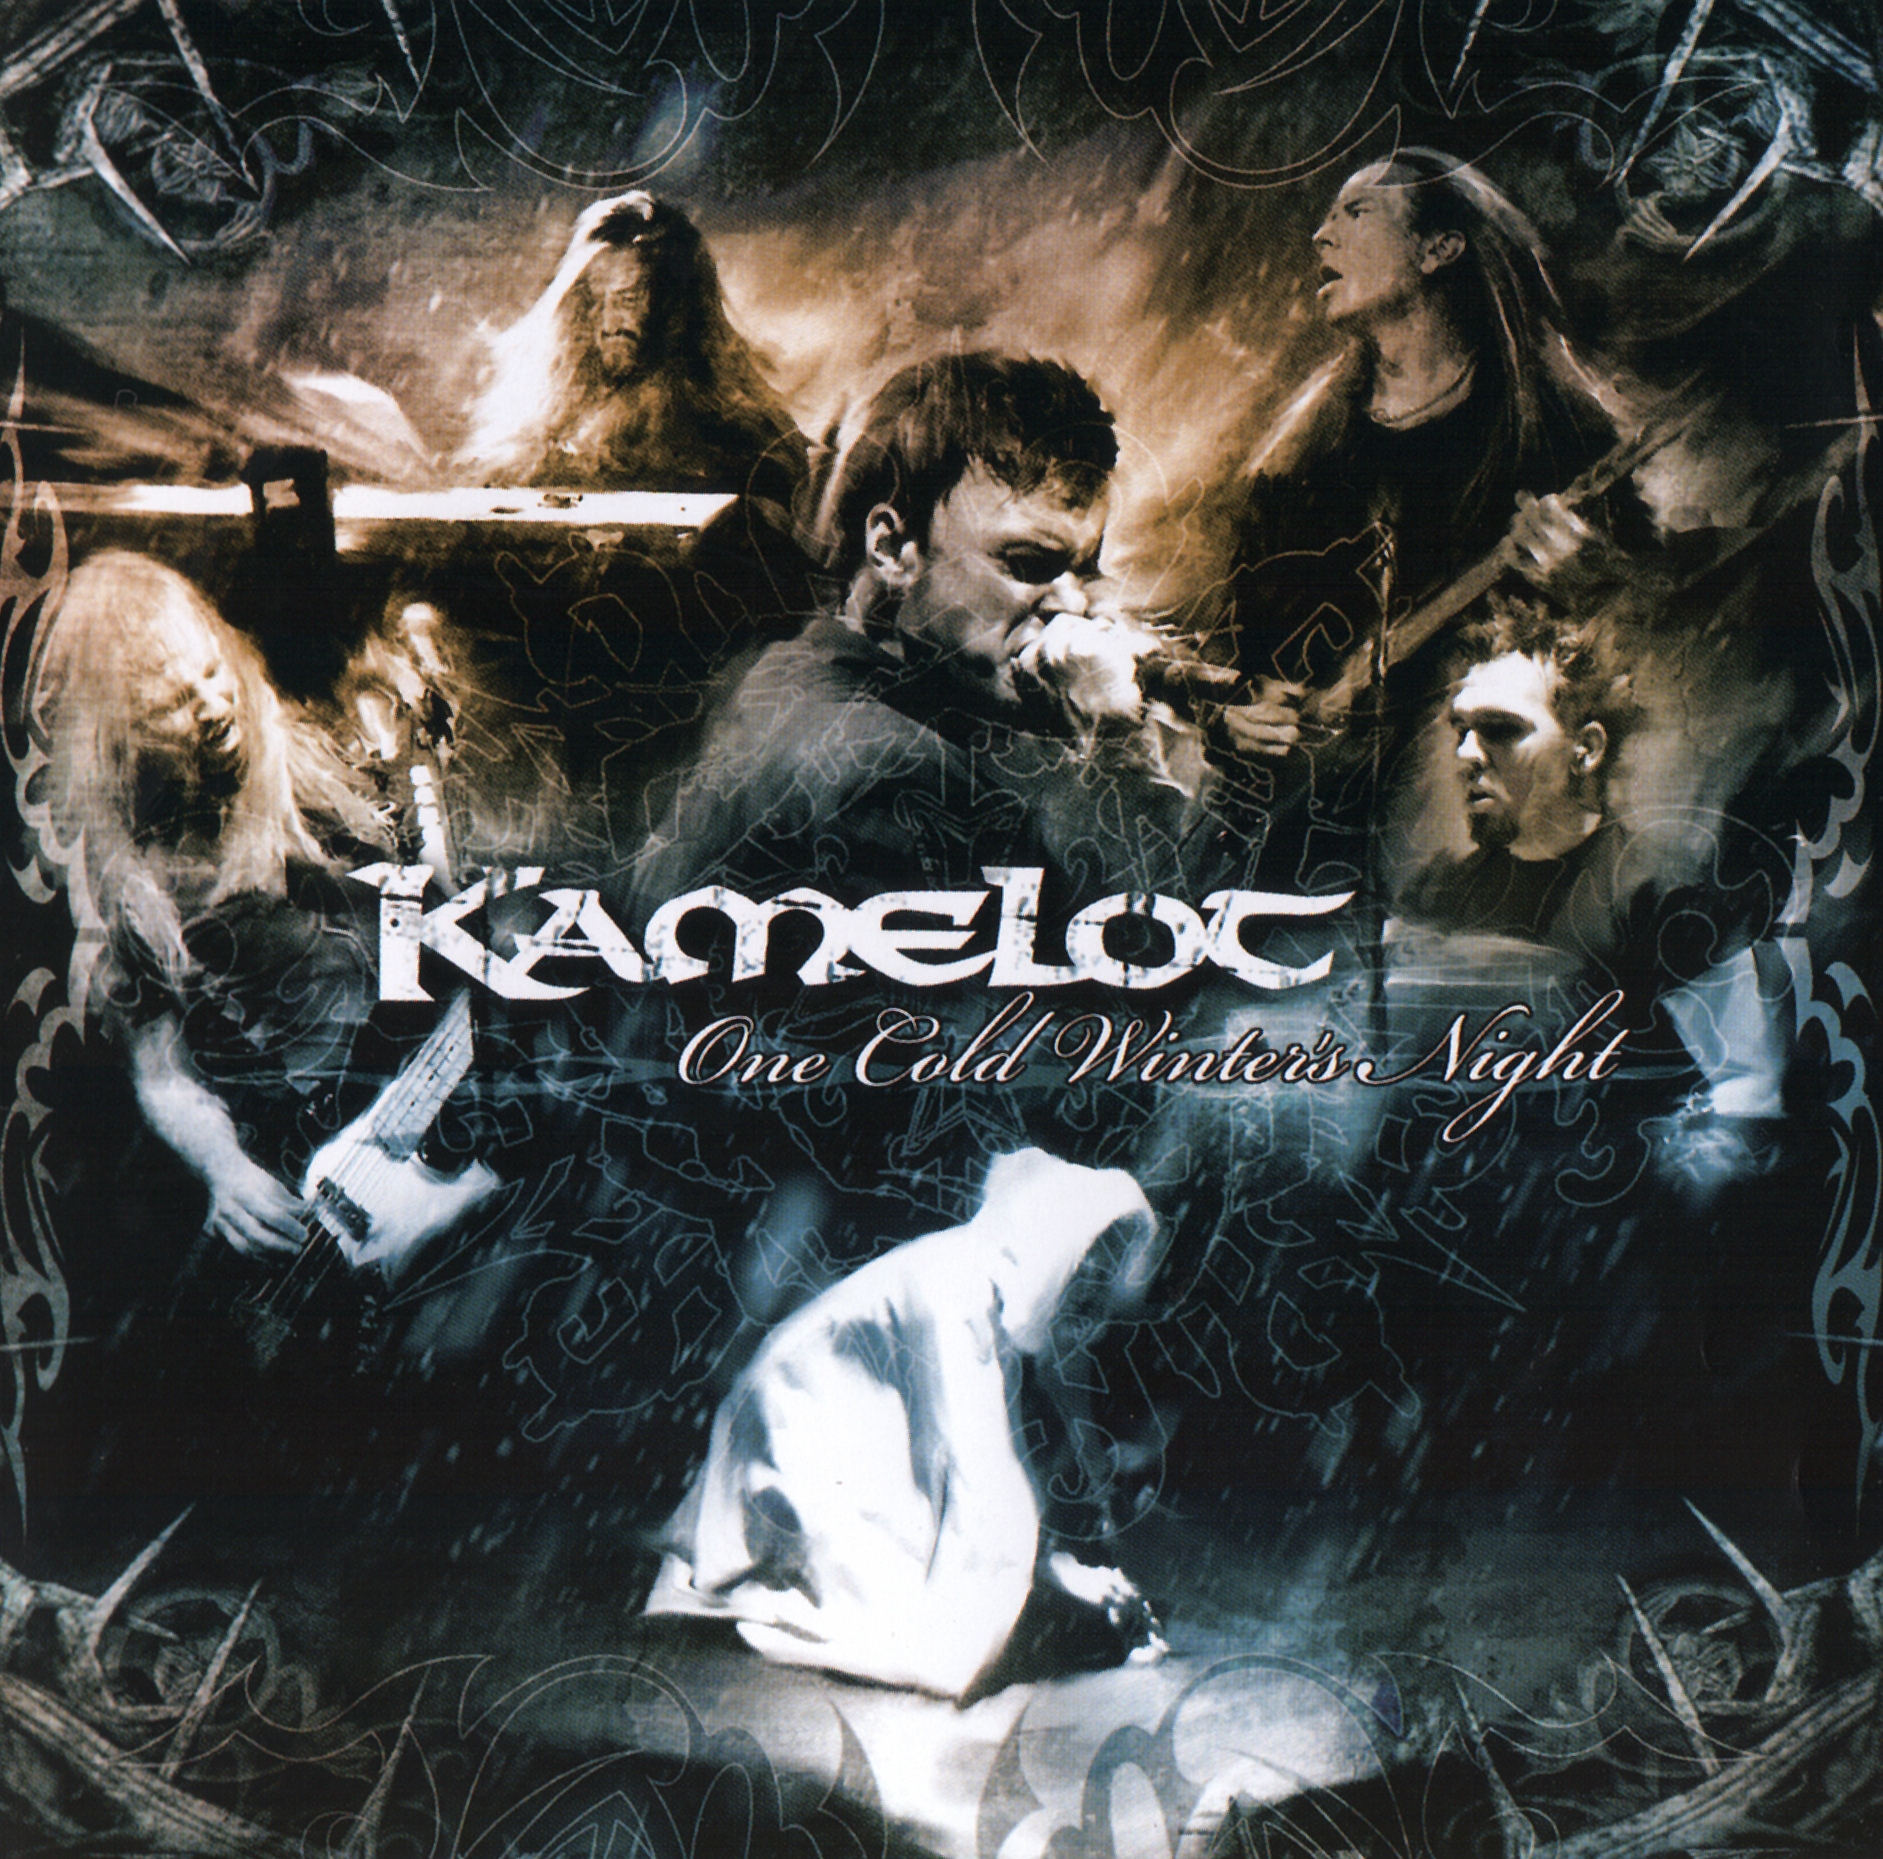 08 KAMELOT - One Cold Winters Night Live  2006 - Kamelot - One Cold Winters Night - Fron.jpg